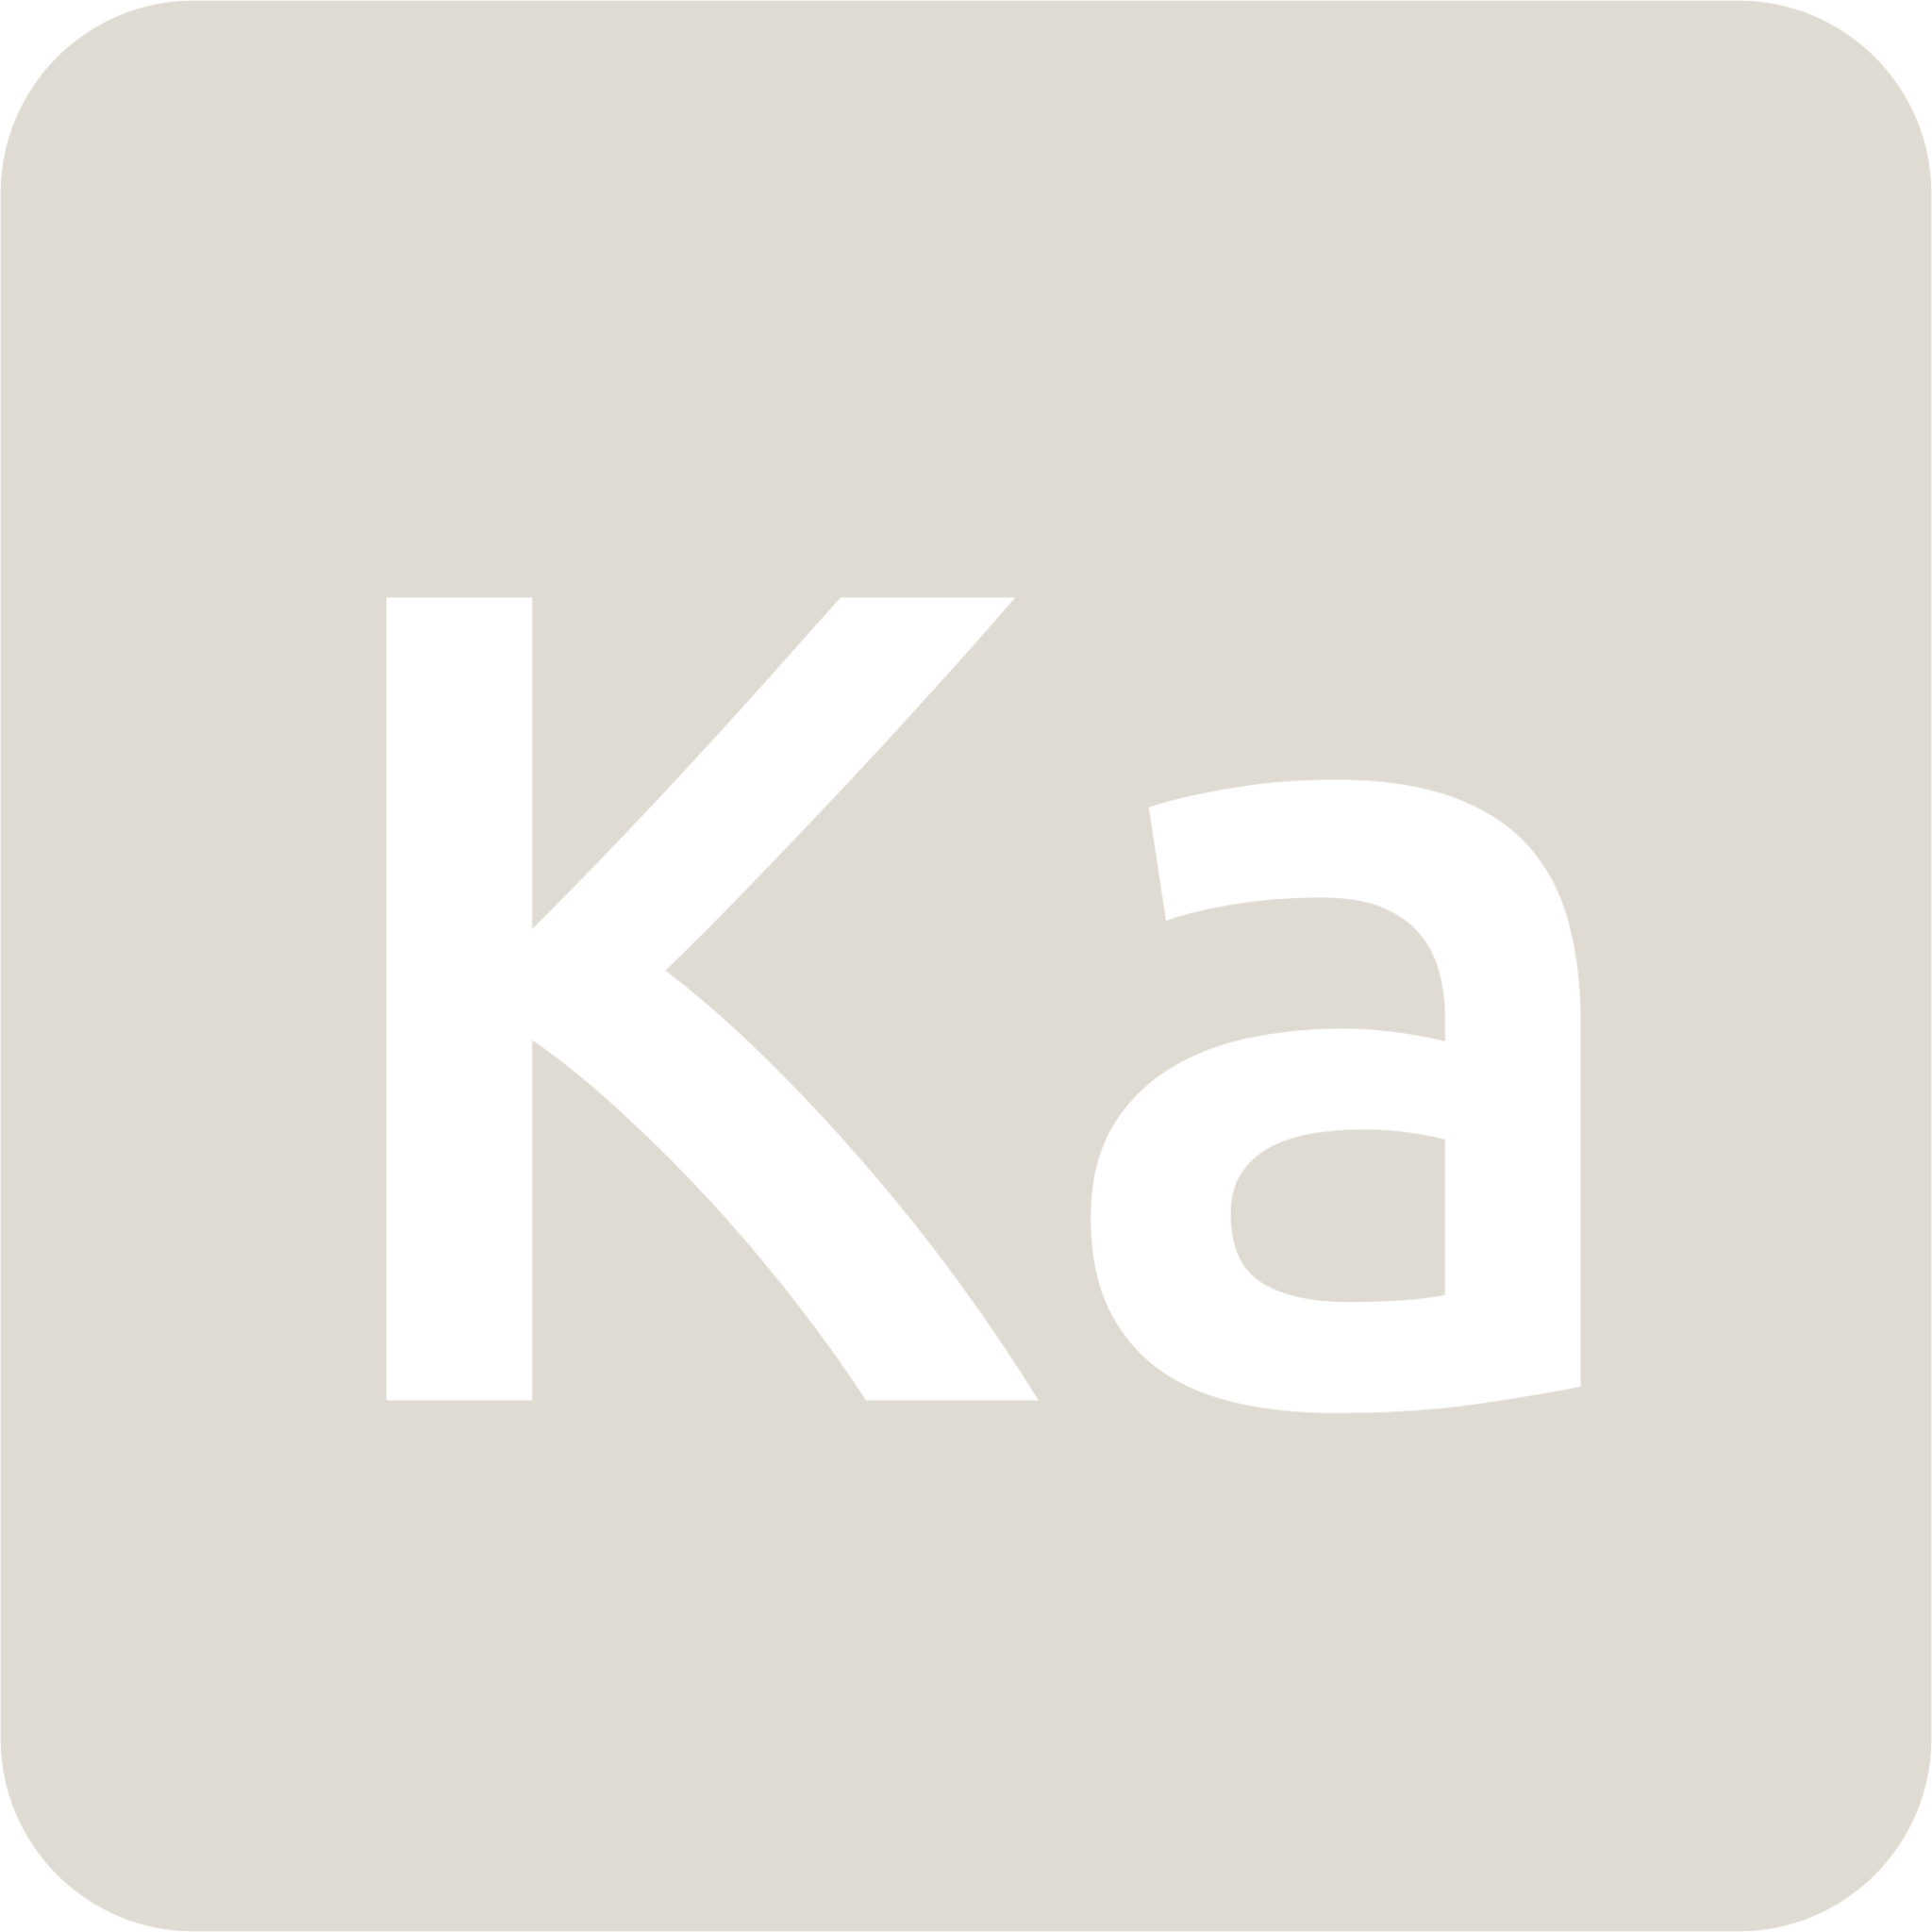 indicator keyboard Ka icon